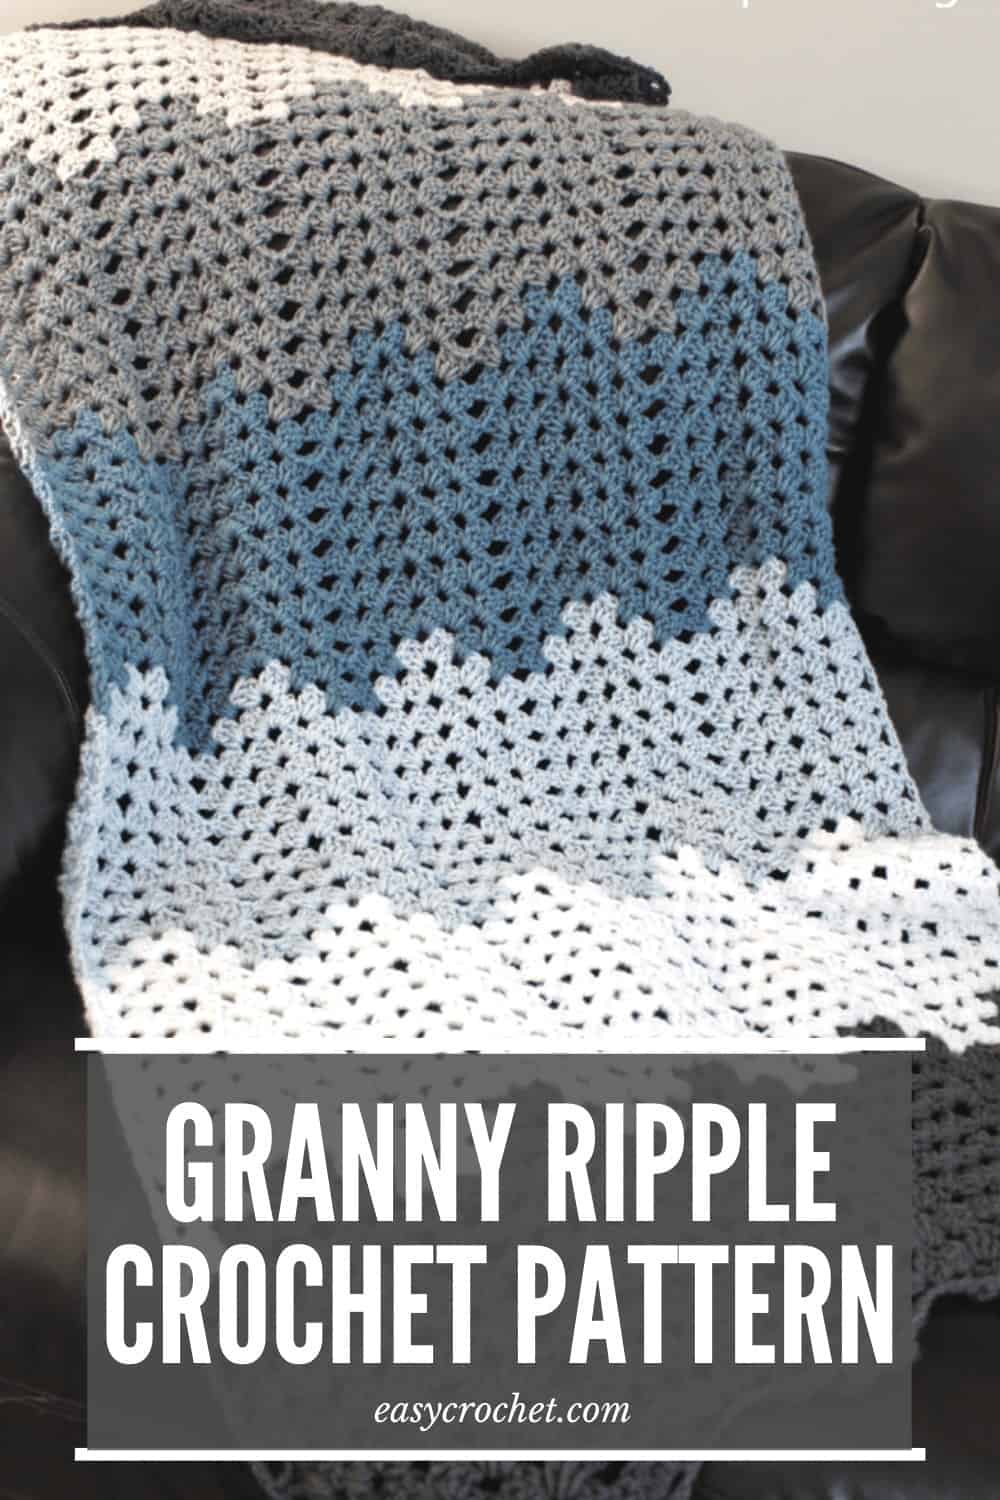 Granny Ripple Crochet Pattern by Easy Crochet via @easycrochetcom